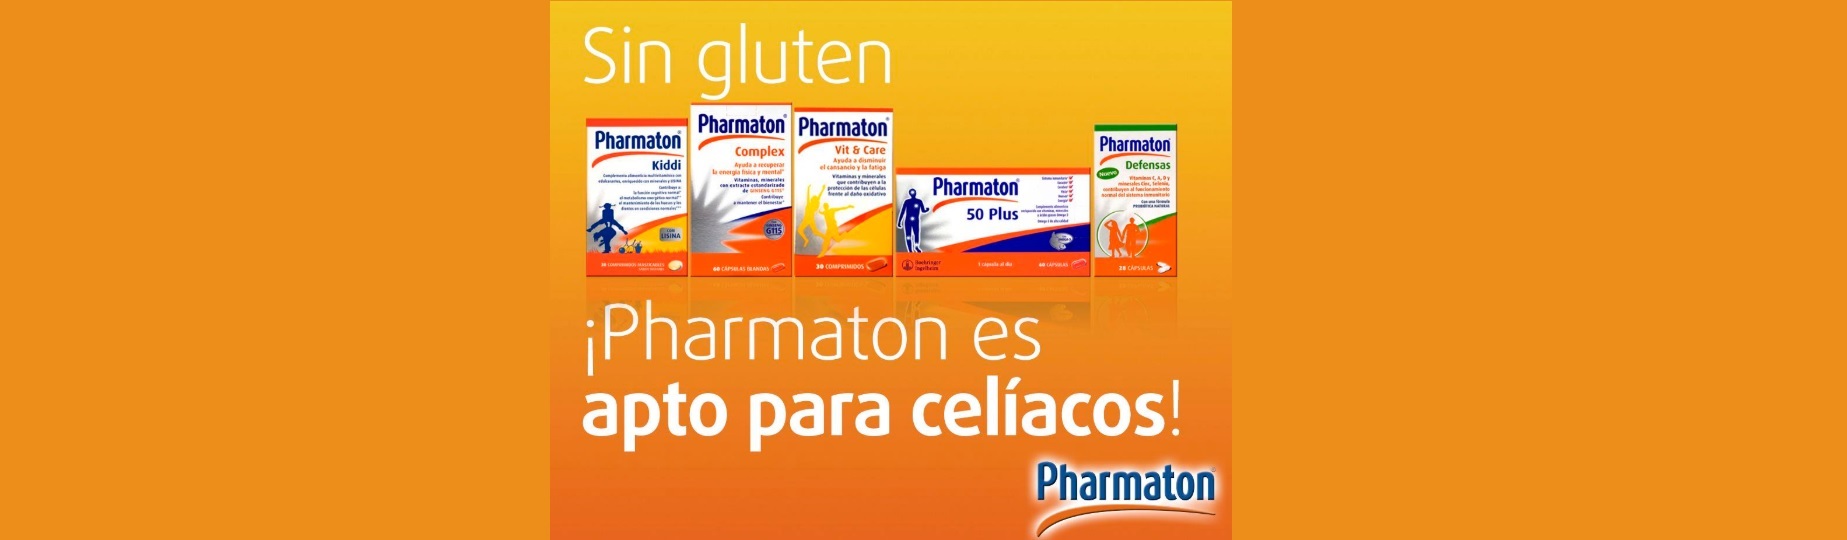 Pharmaton Productos en Farma2go